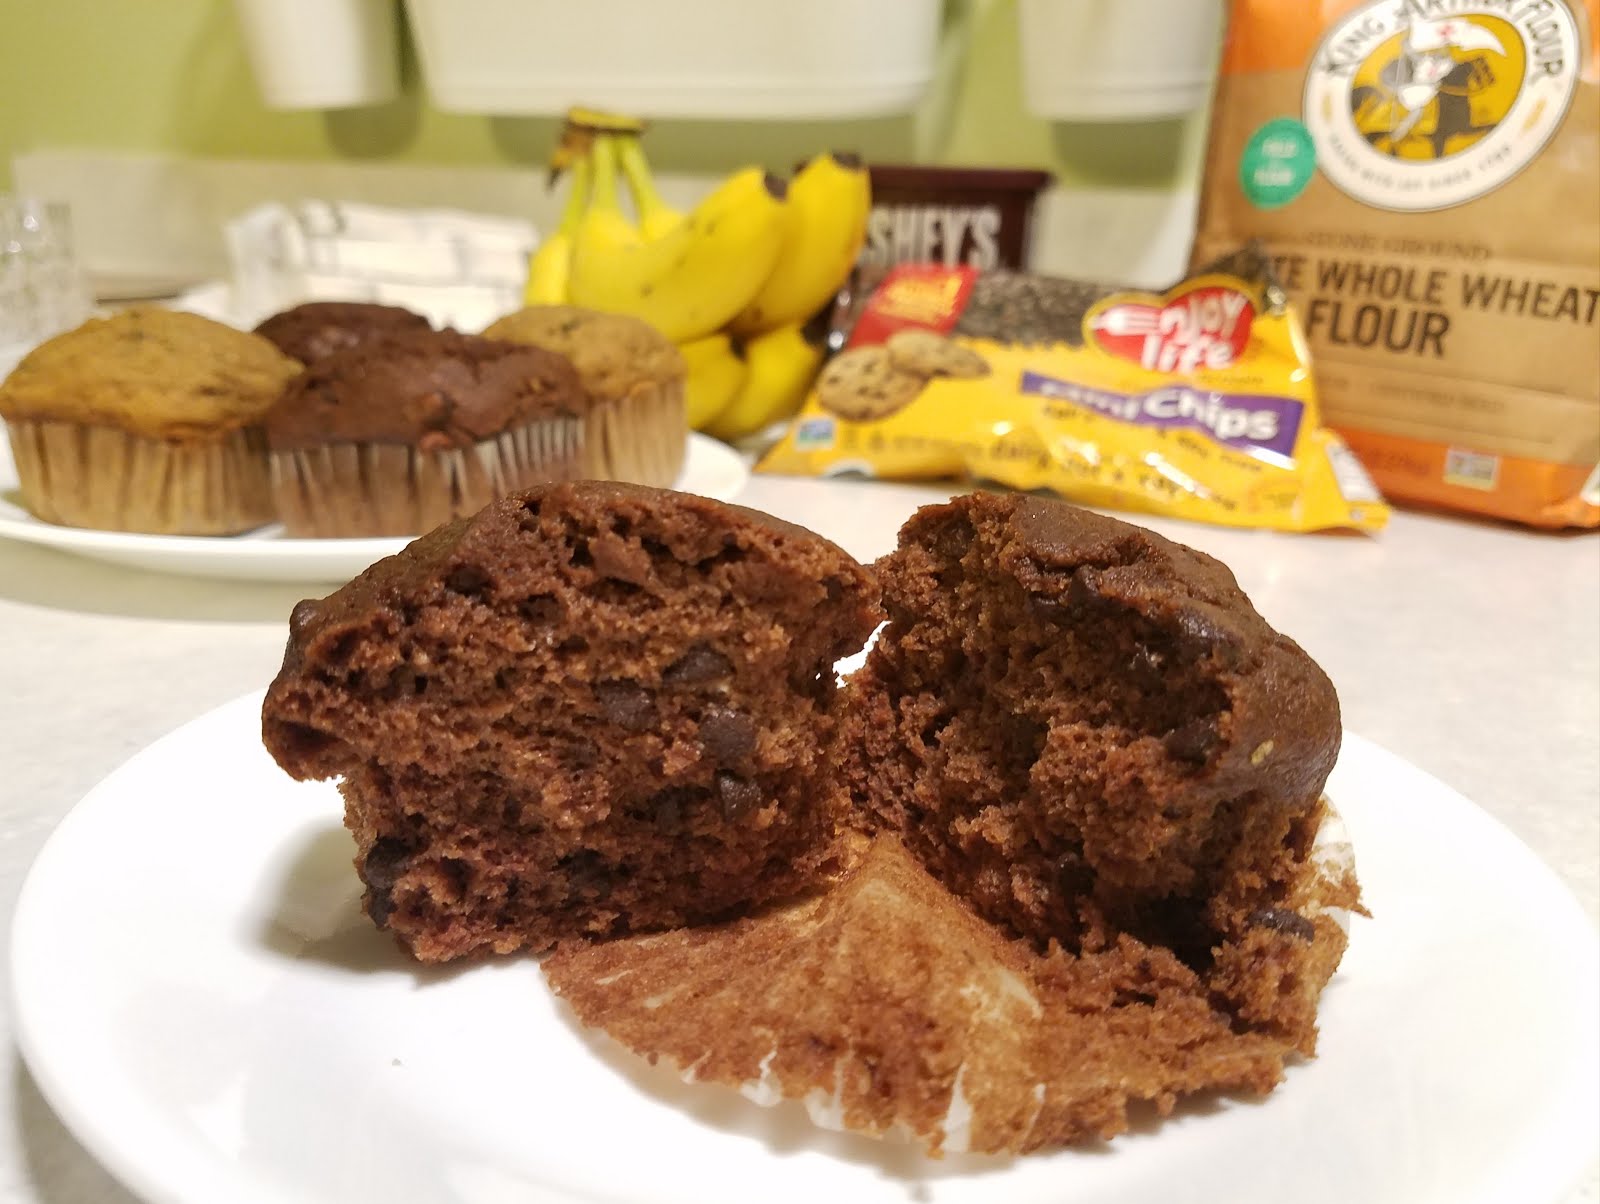 Muffins - Finding That Perfect Vegan (or non vegan) Recipe